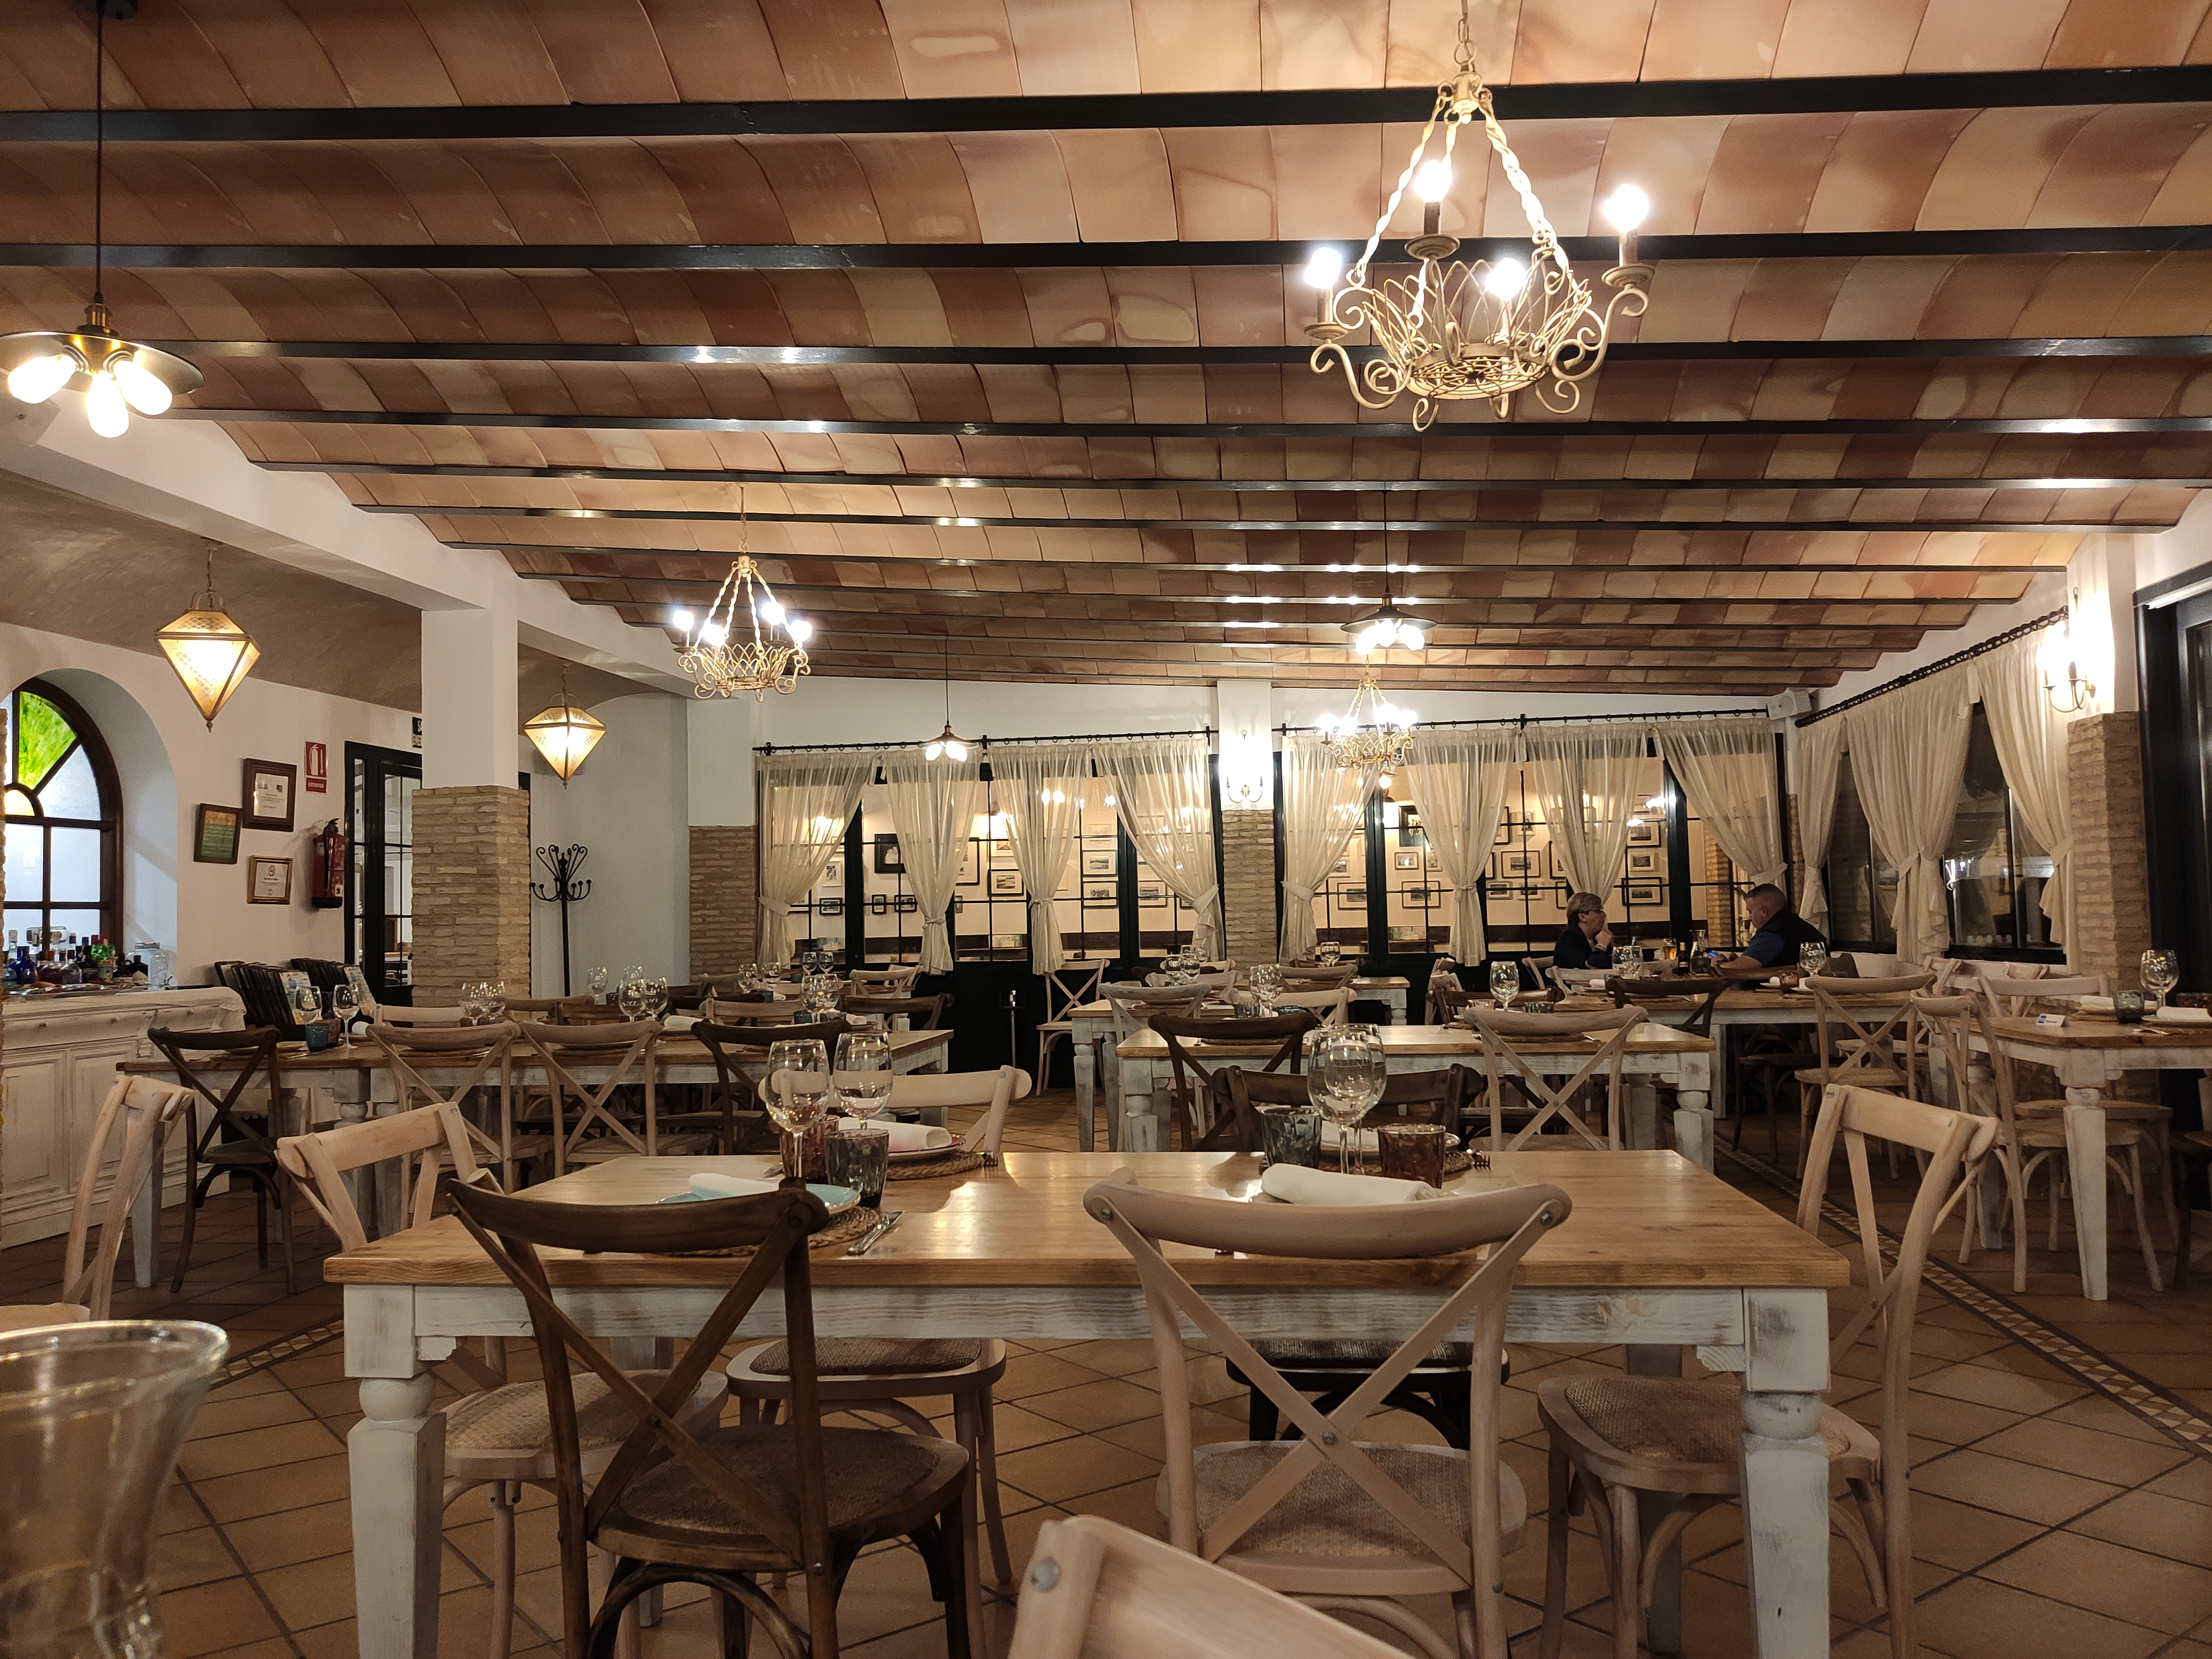 Images Restaurante Las Dunas